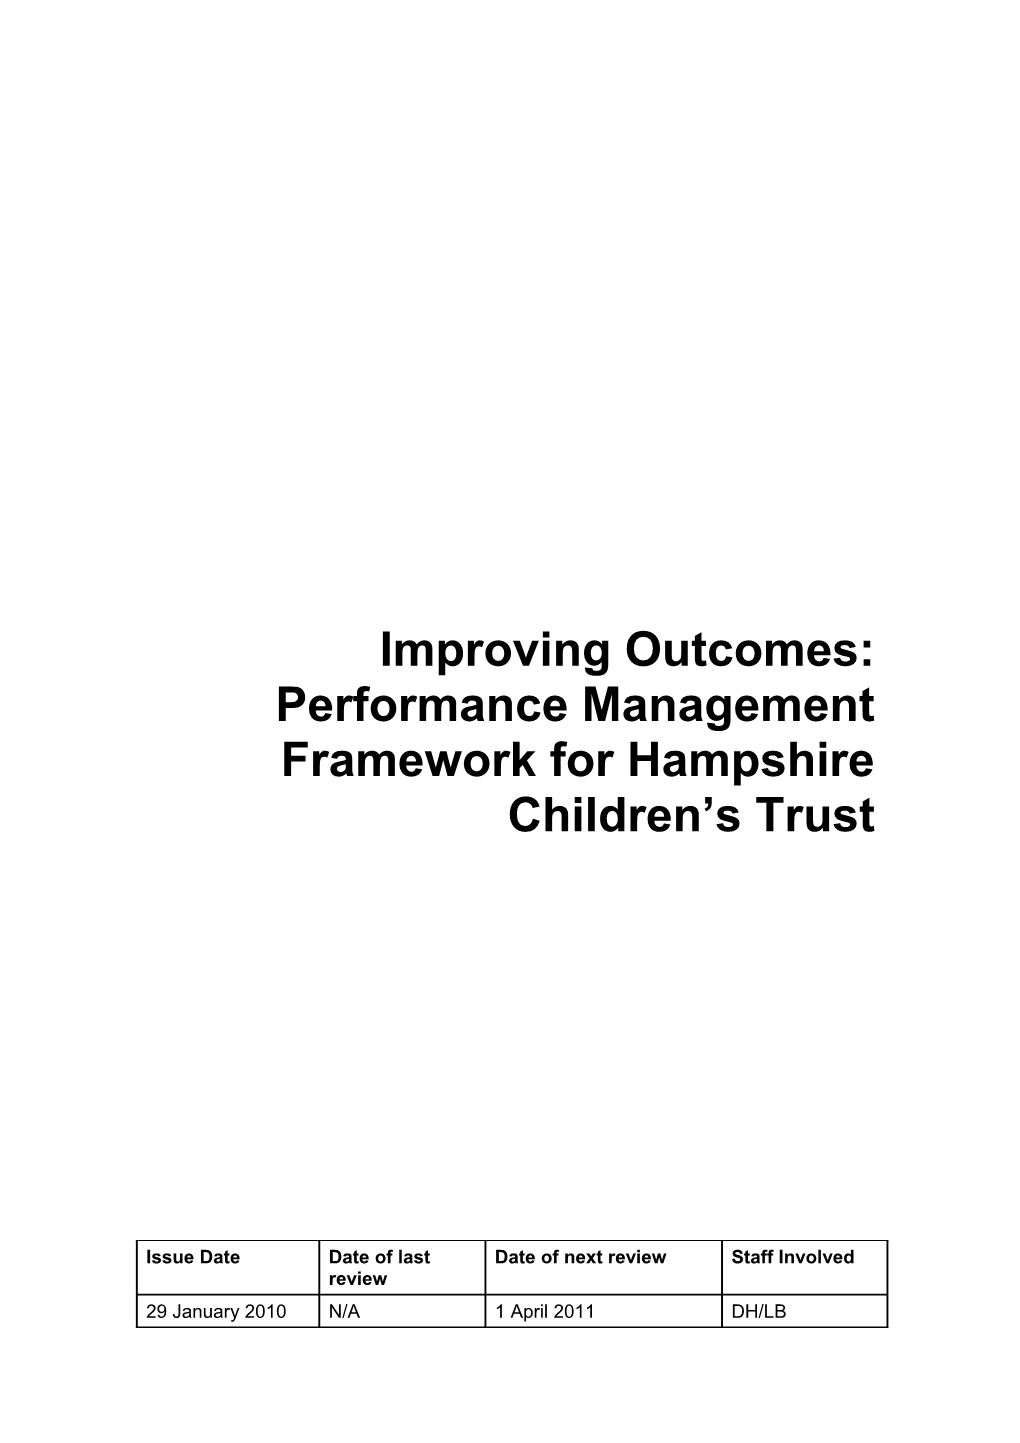 Performance Management Framework for Hampshire Children S Trust